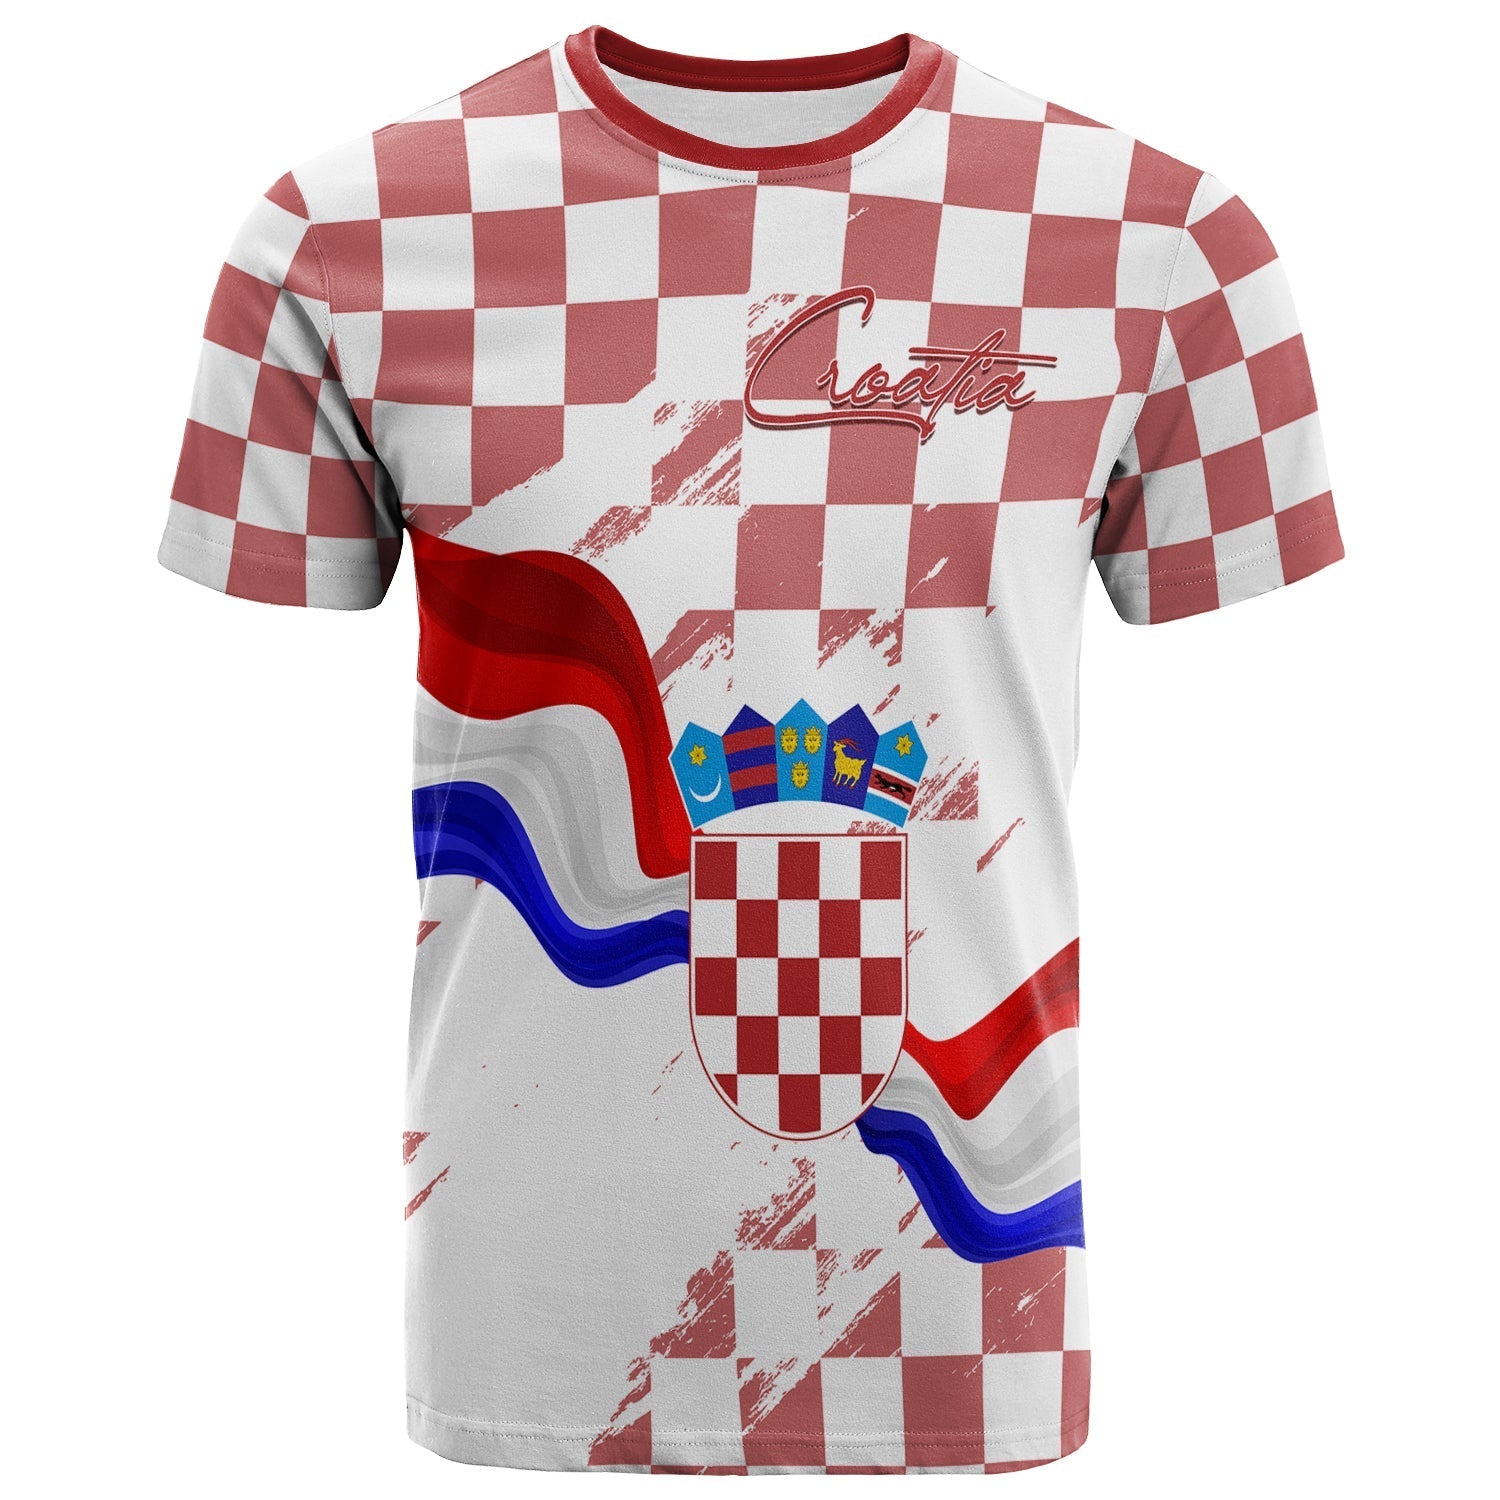 croatia-t-shirt-checkerboard-grunge-style